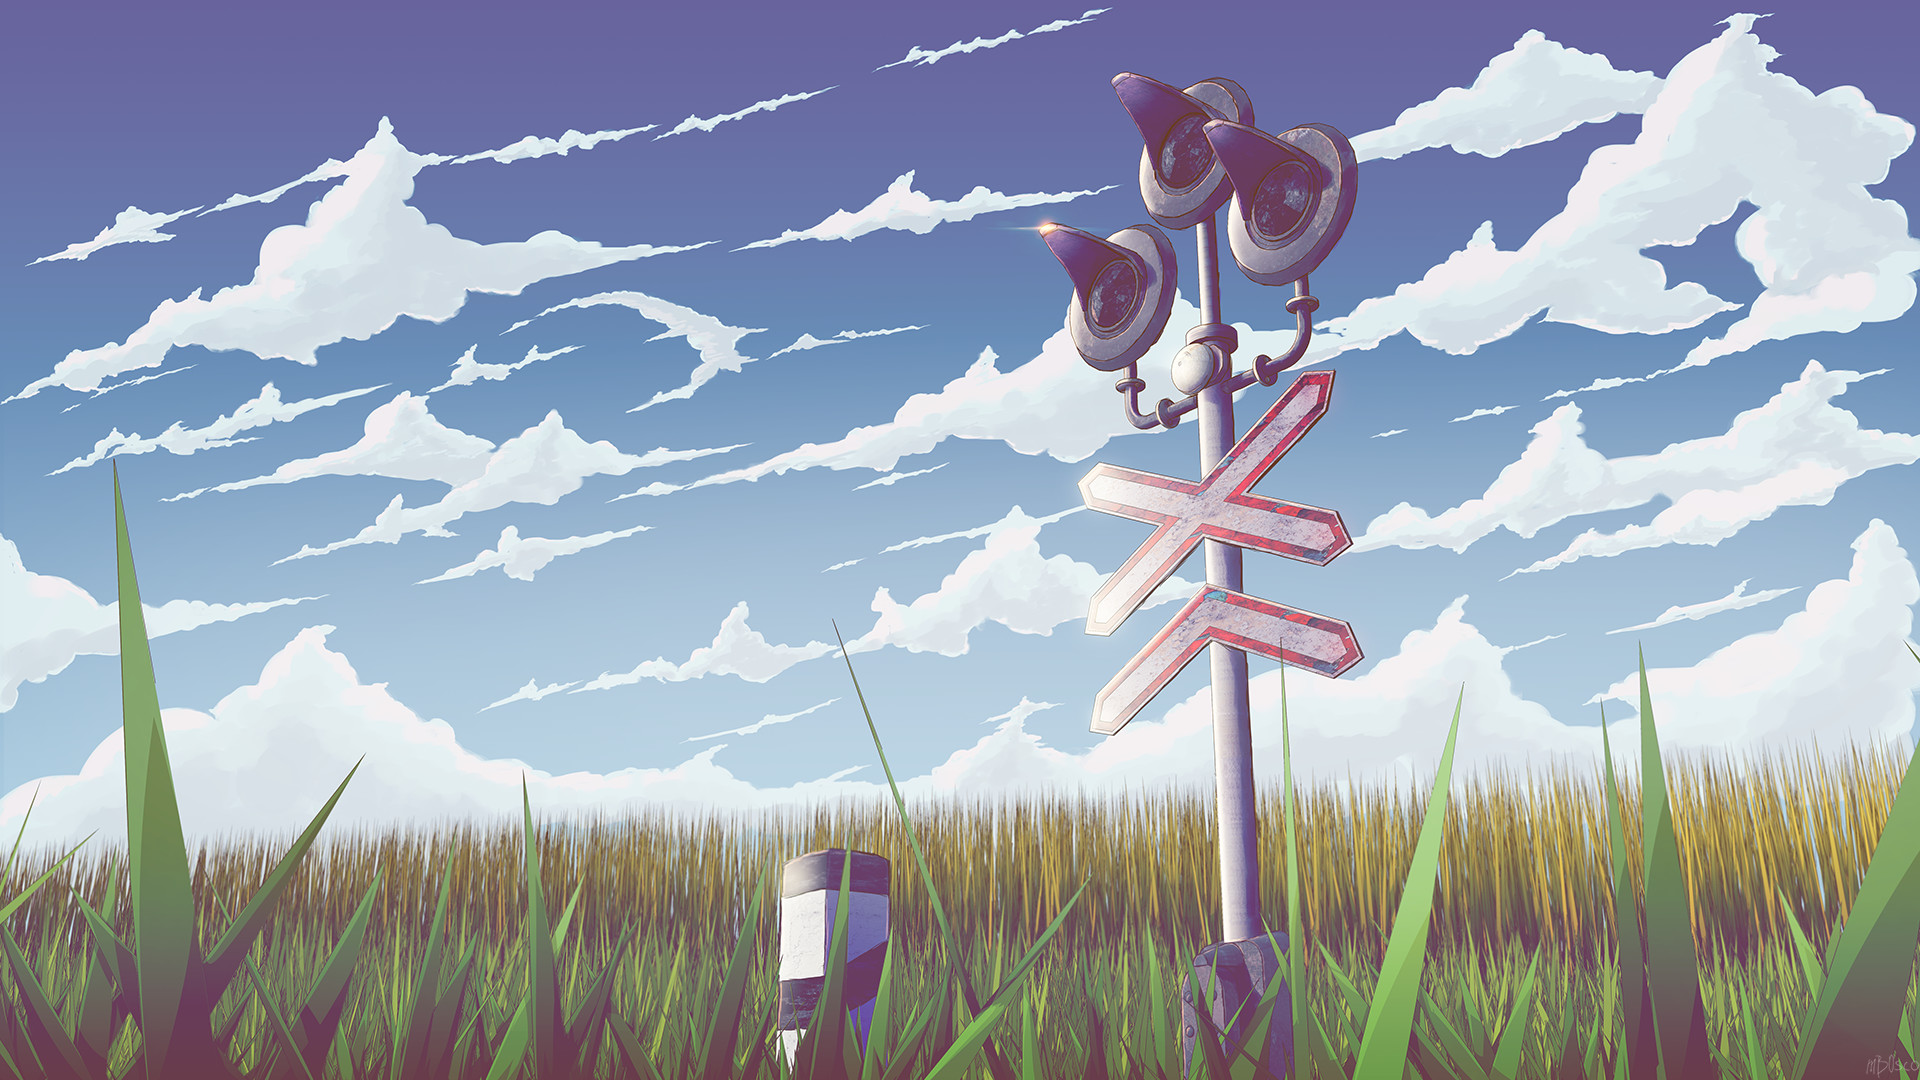 Anime 1920x1080 Bogdan mB0sco digital art clouds grass railway